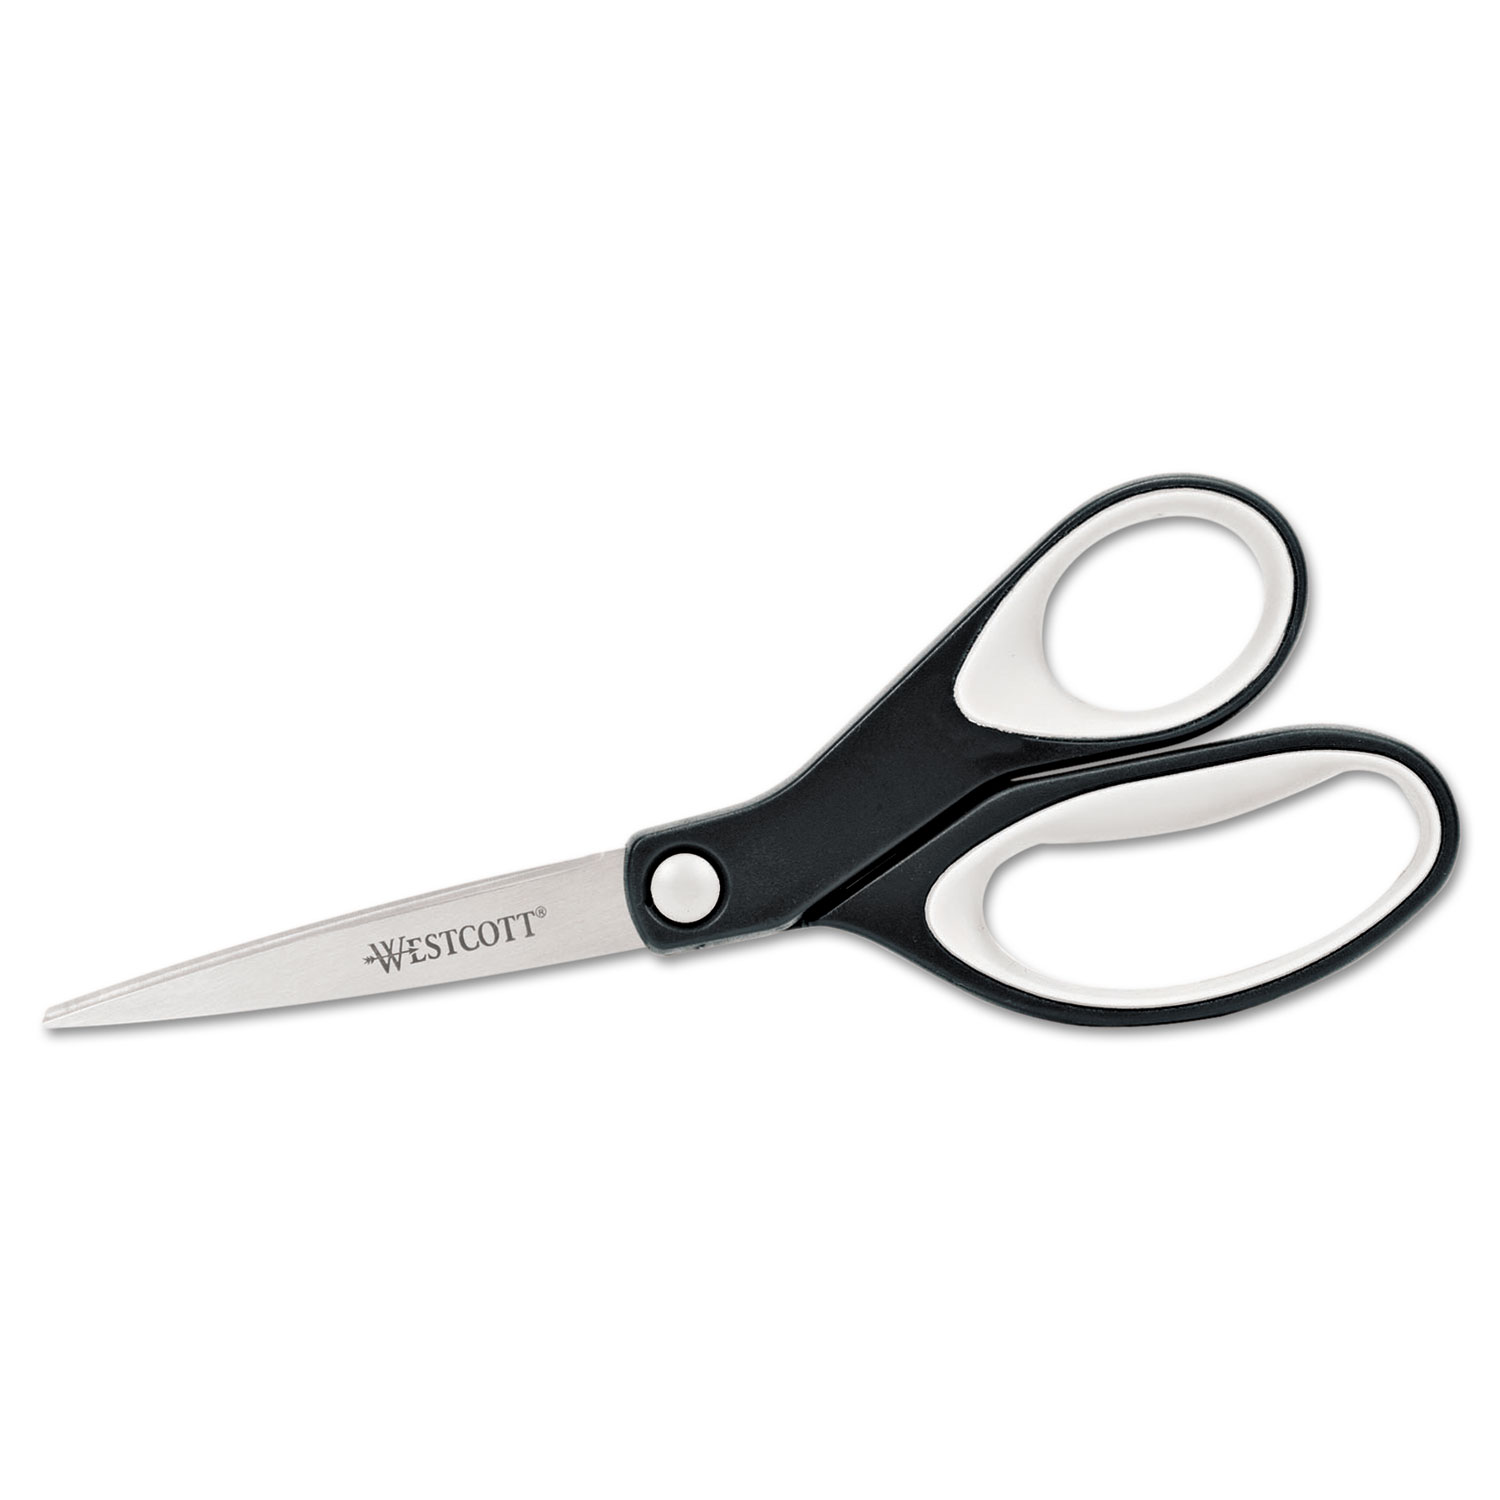  Westcott 15588 KleenEarth Soft Handle Scissors, 8 Long, 3.25 Cut Length, Black/Gray Straight Handle (ACM15588) 